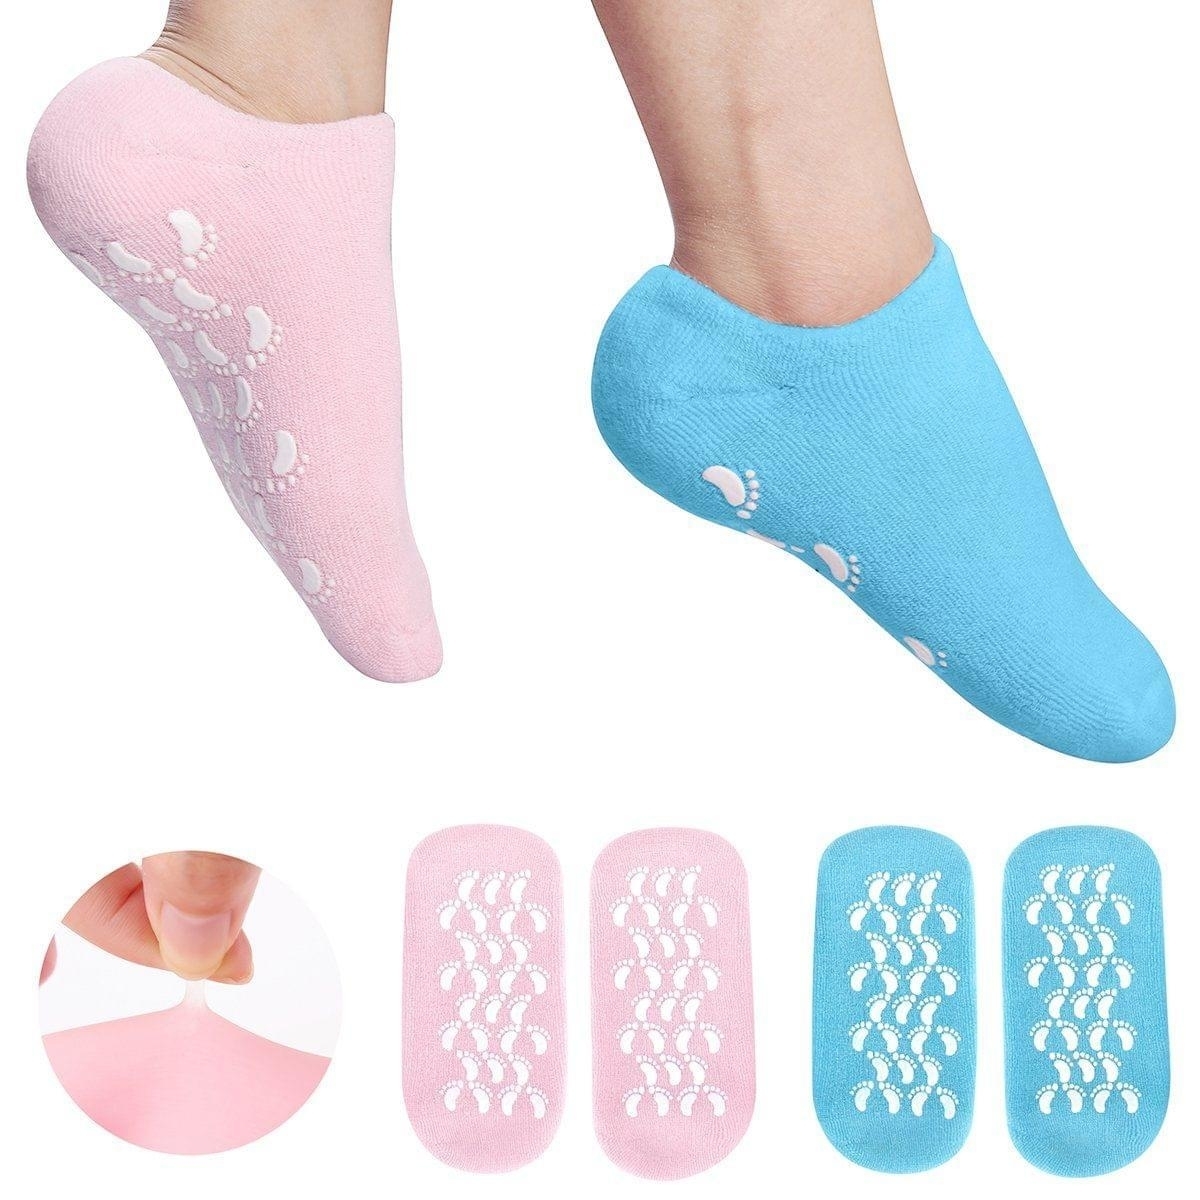 Moisturizing Gel Socks, Ultra-Soft Moisturizing Socks with Spa Quality Helps Repair Dry Cracked Skins and Softens.